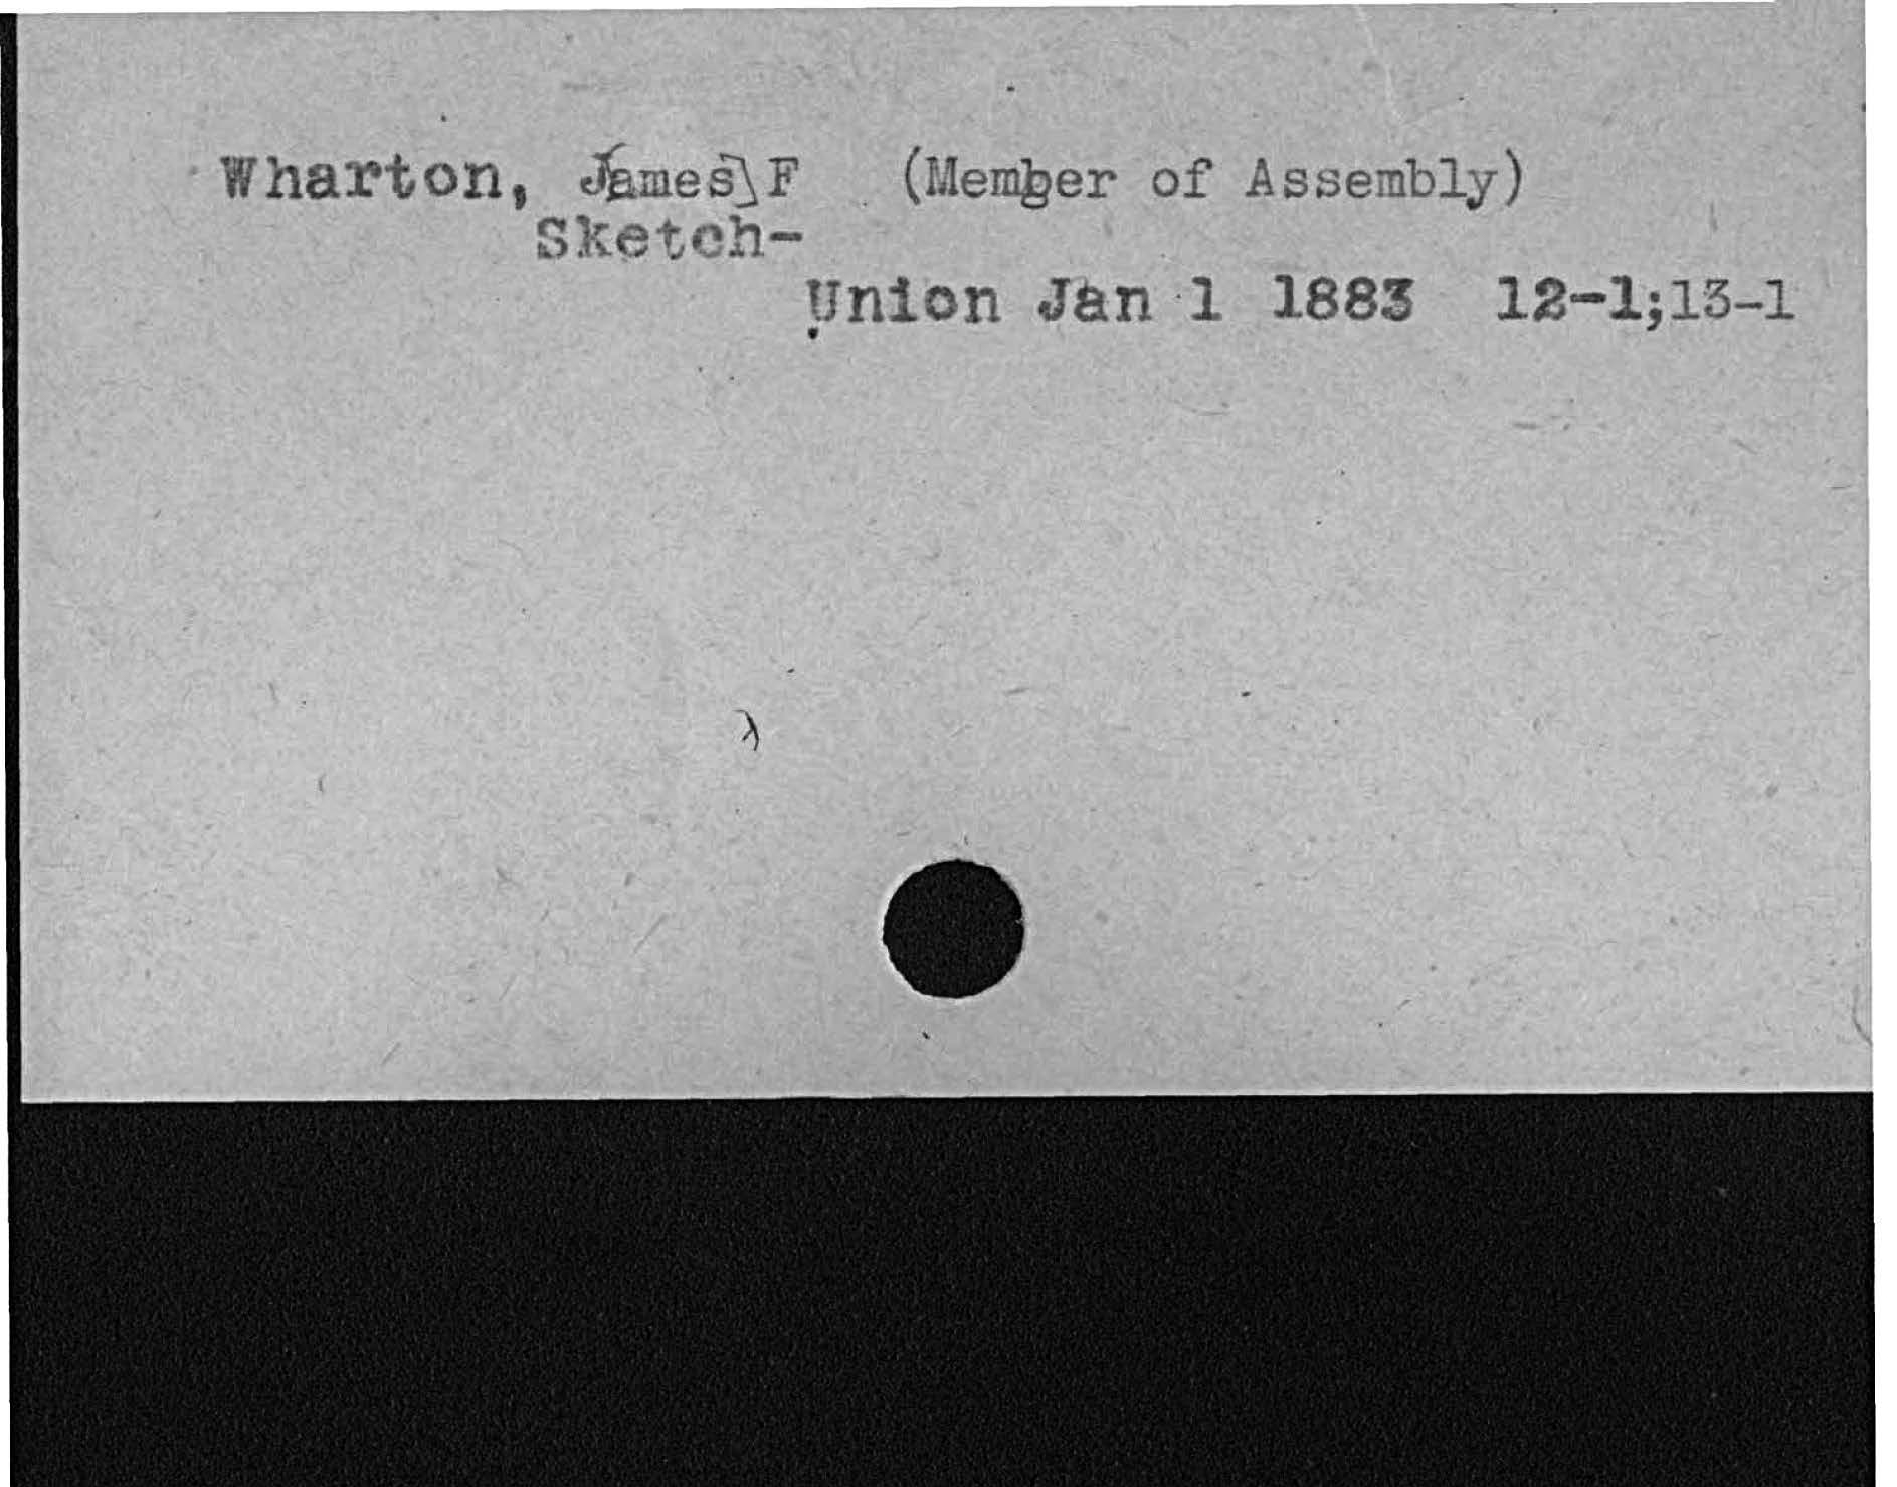 Wharton,Sketchun on Jan 1 188. 12- 1; 15- 1